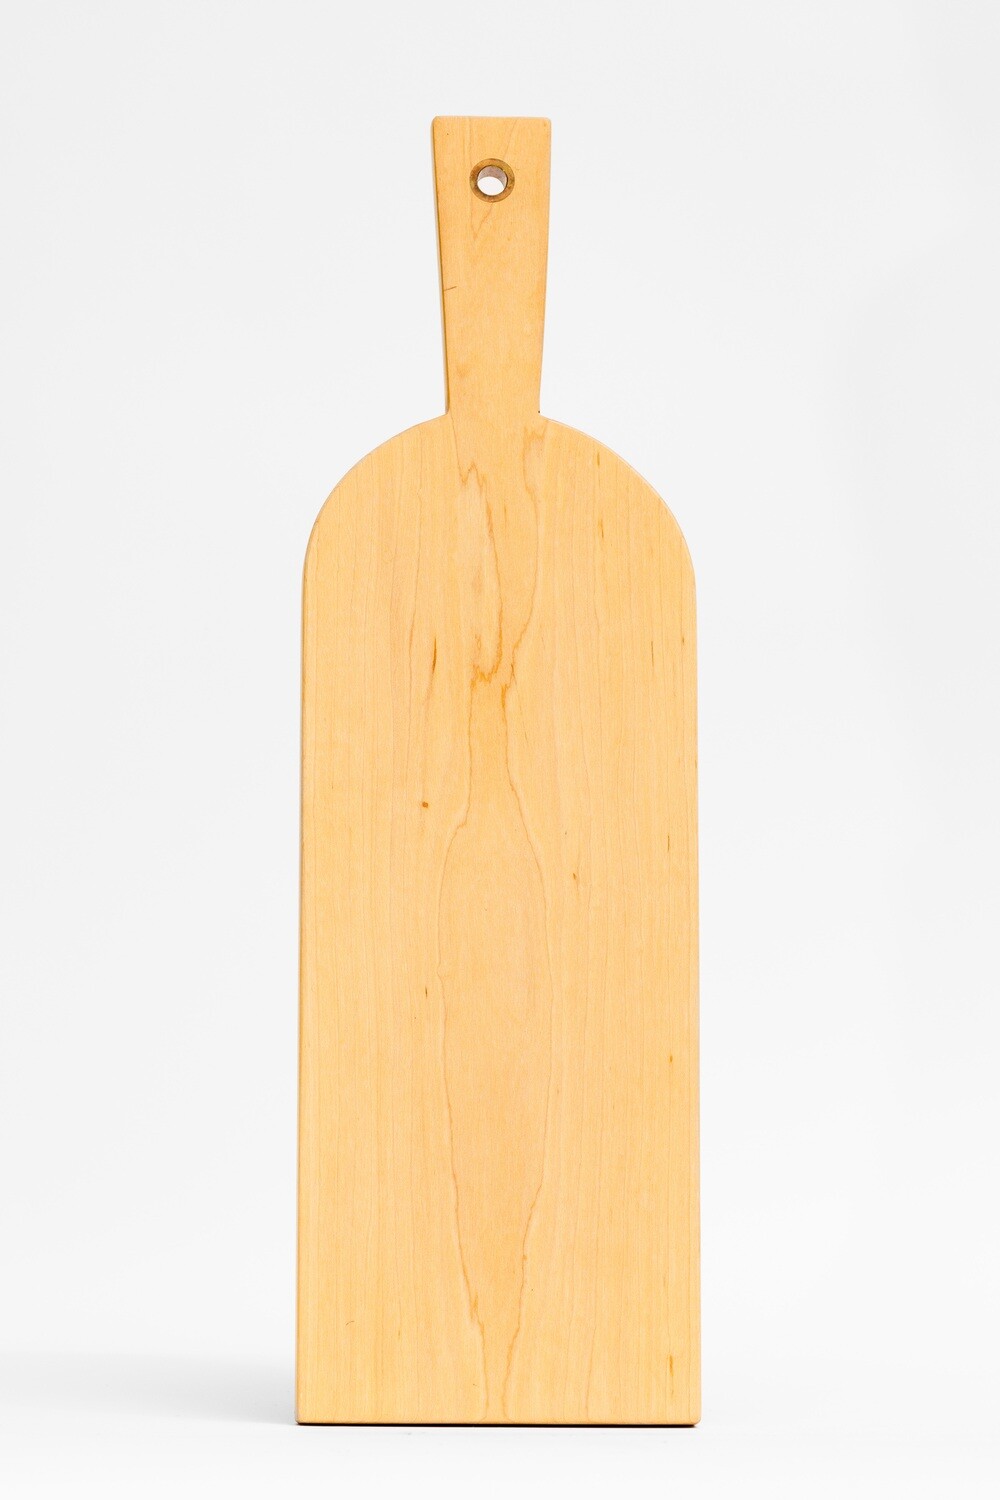 Hudson Workshop Cutting Board - Maple Paddle